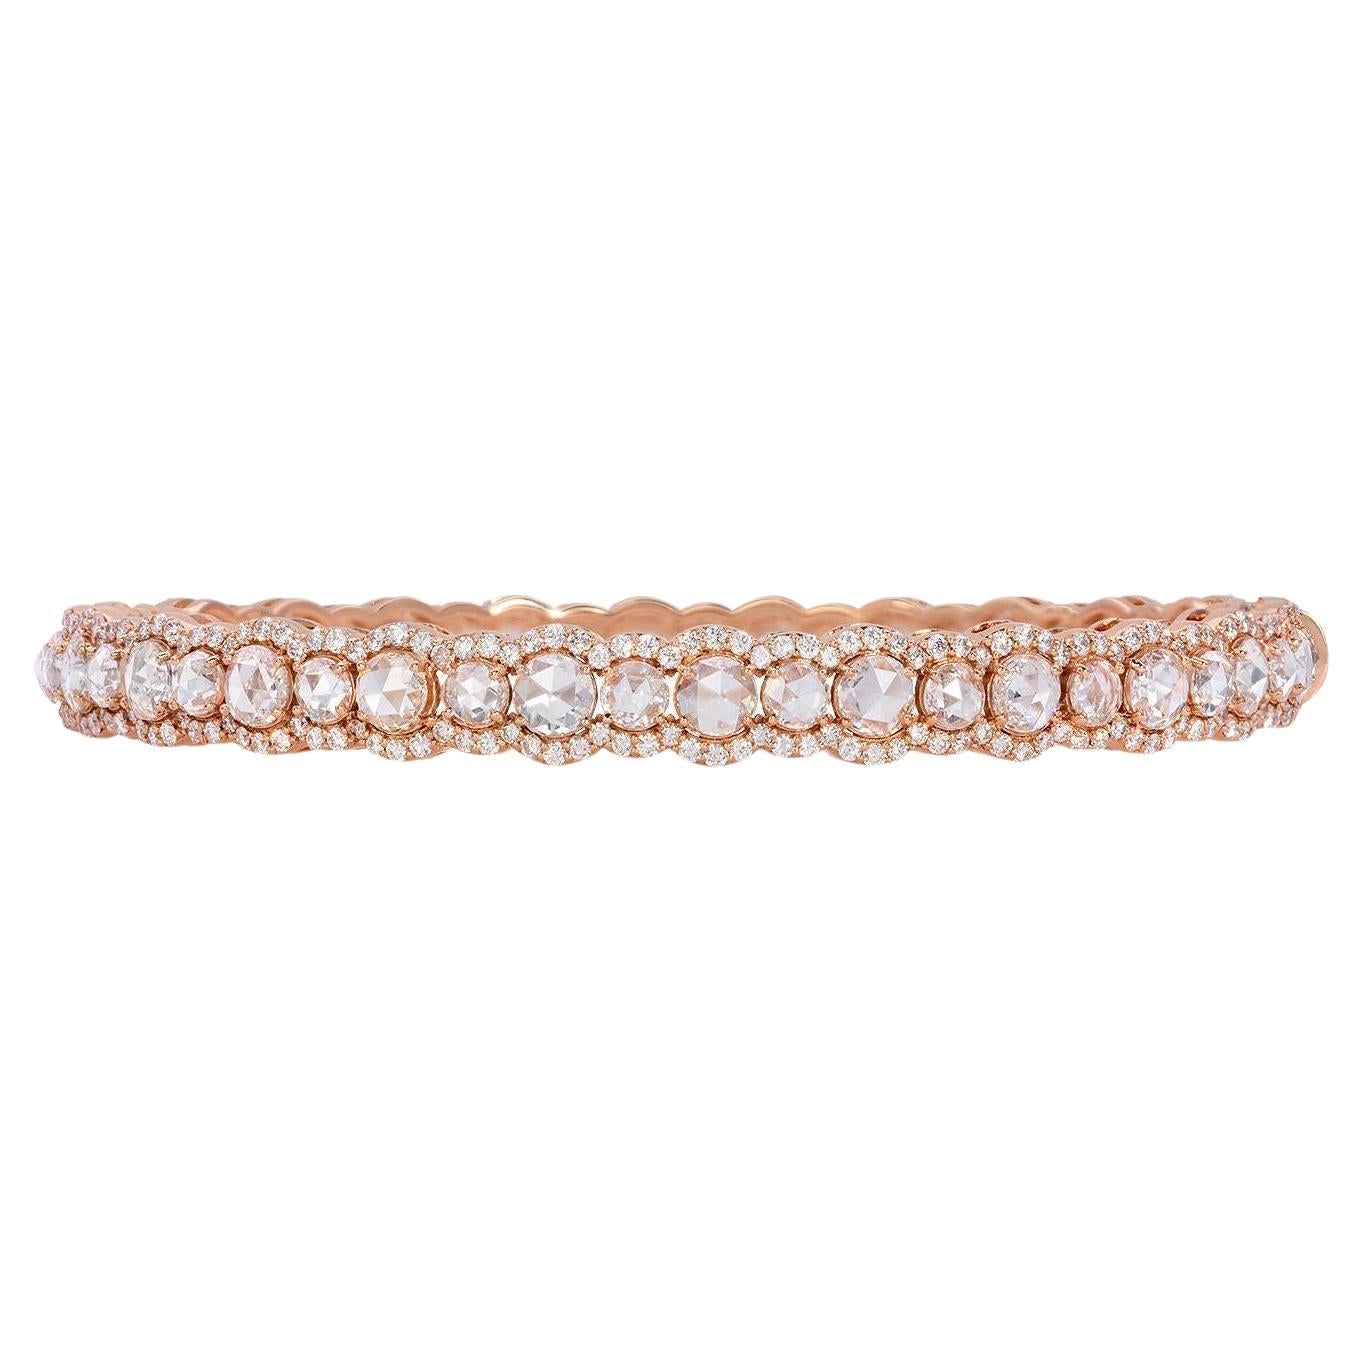 6.72 Carat Rose Cut Diamond 18K Gold Bracelet - The Serena Gold For Sale